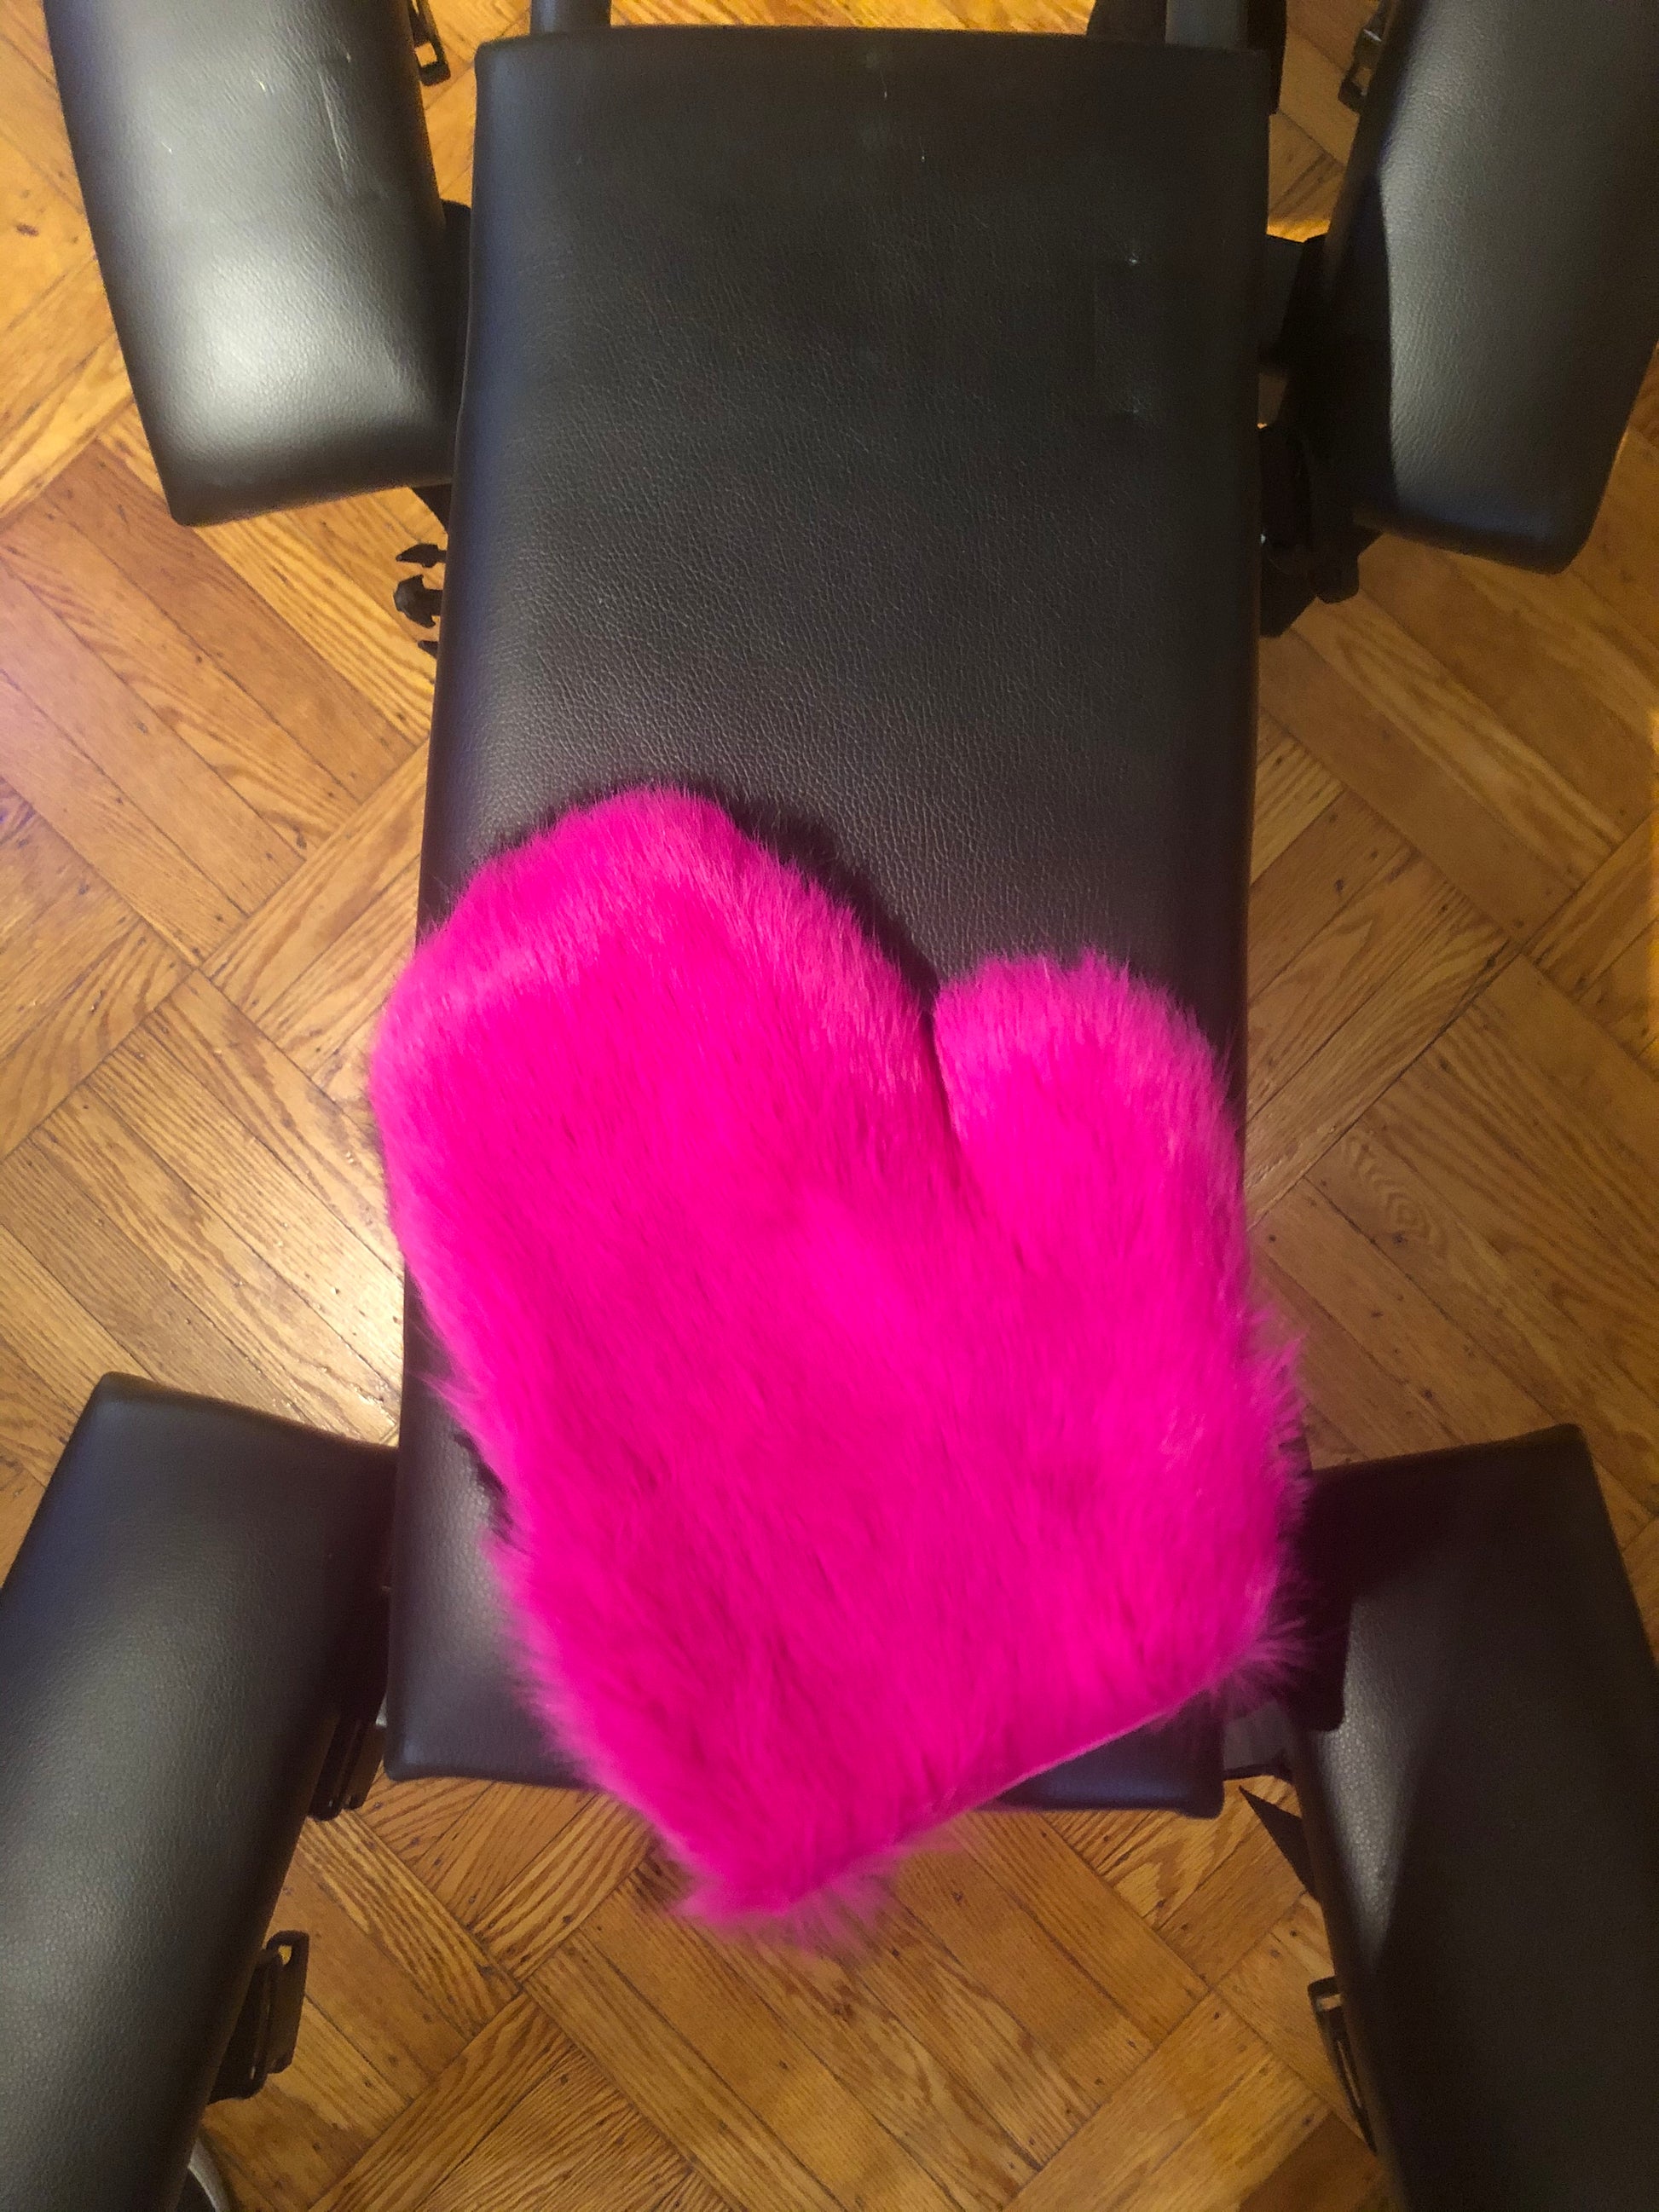 Full view of pink left hand rabbit fur glove